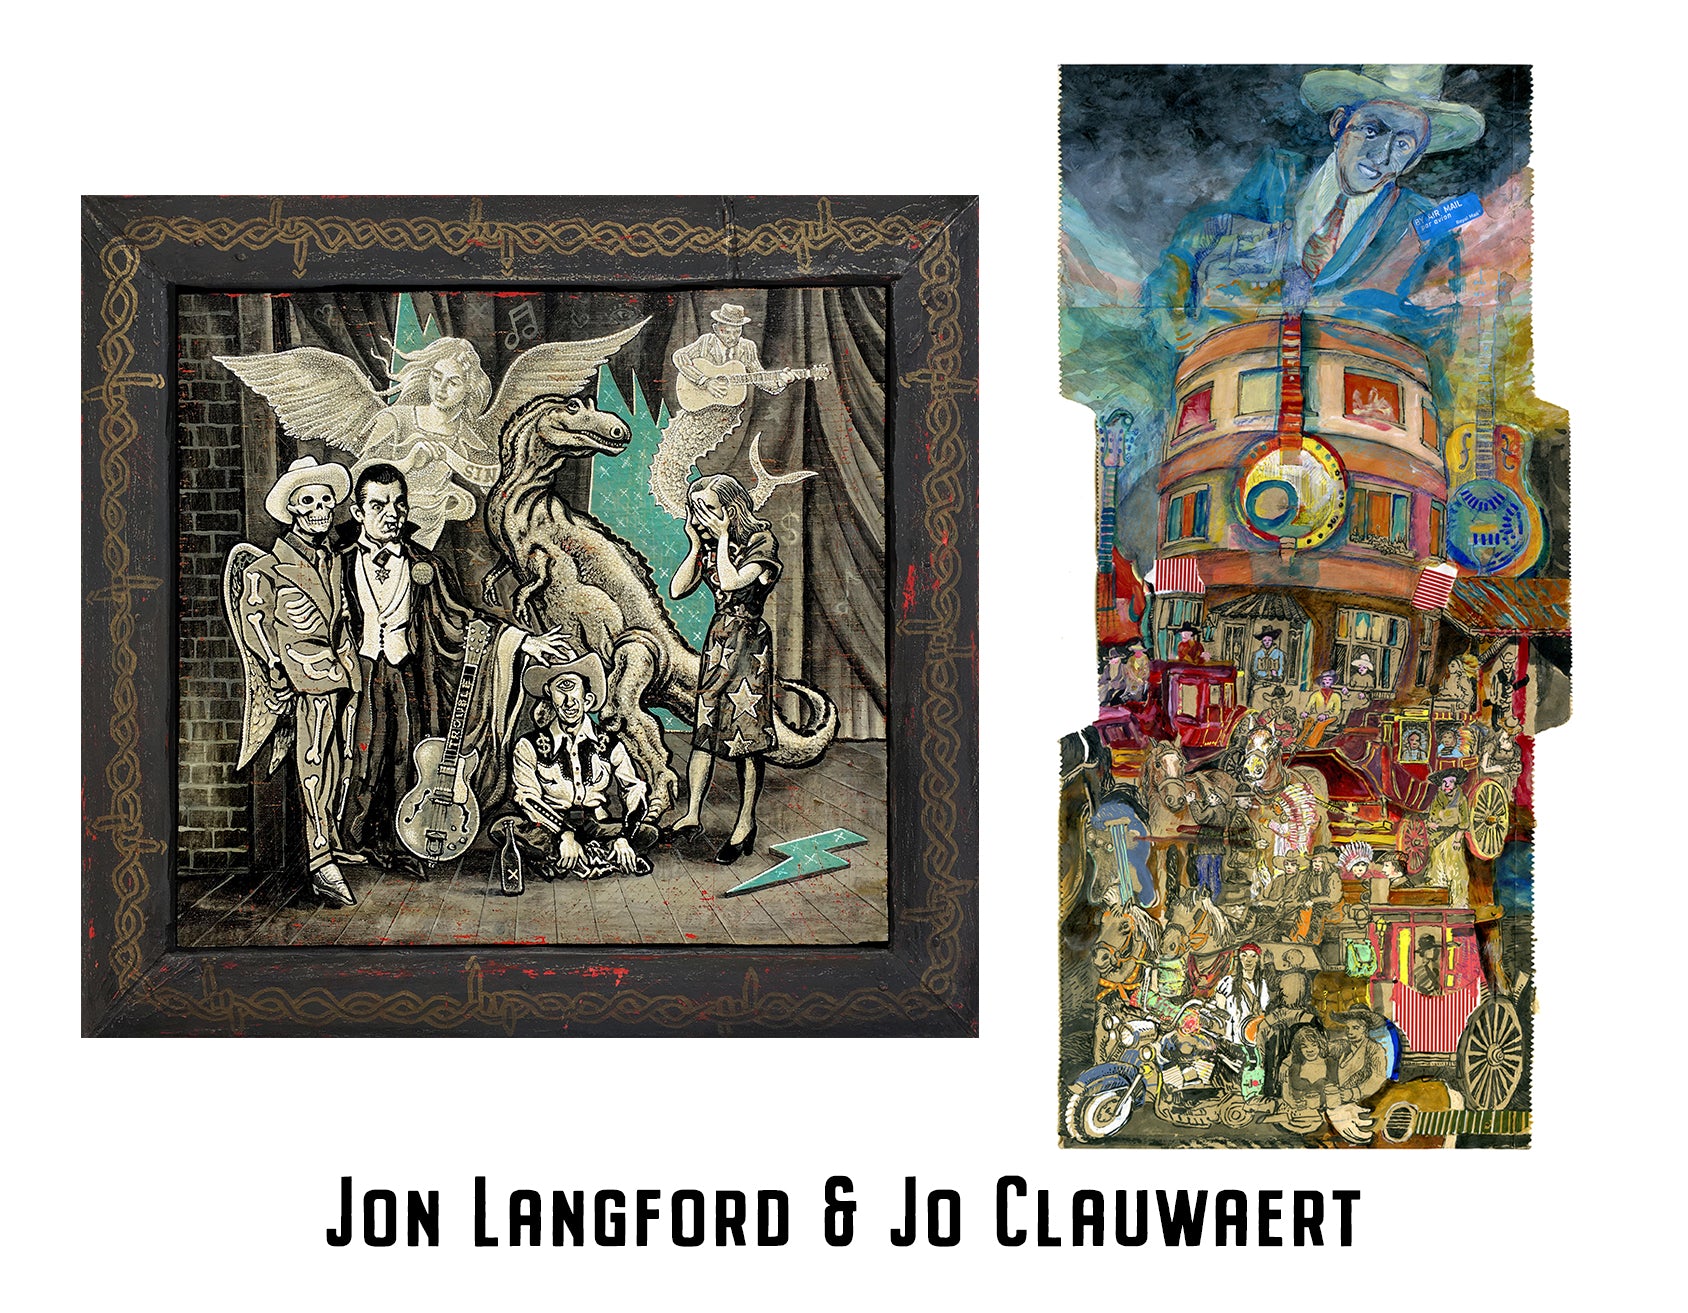 Jon Langford +Jo Clauwaert